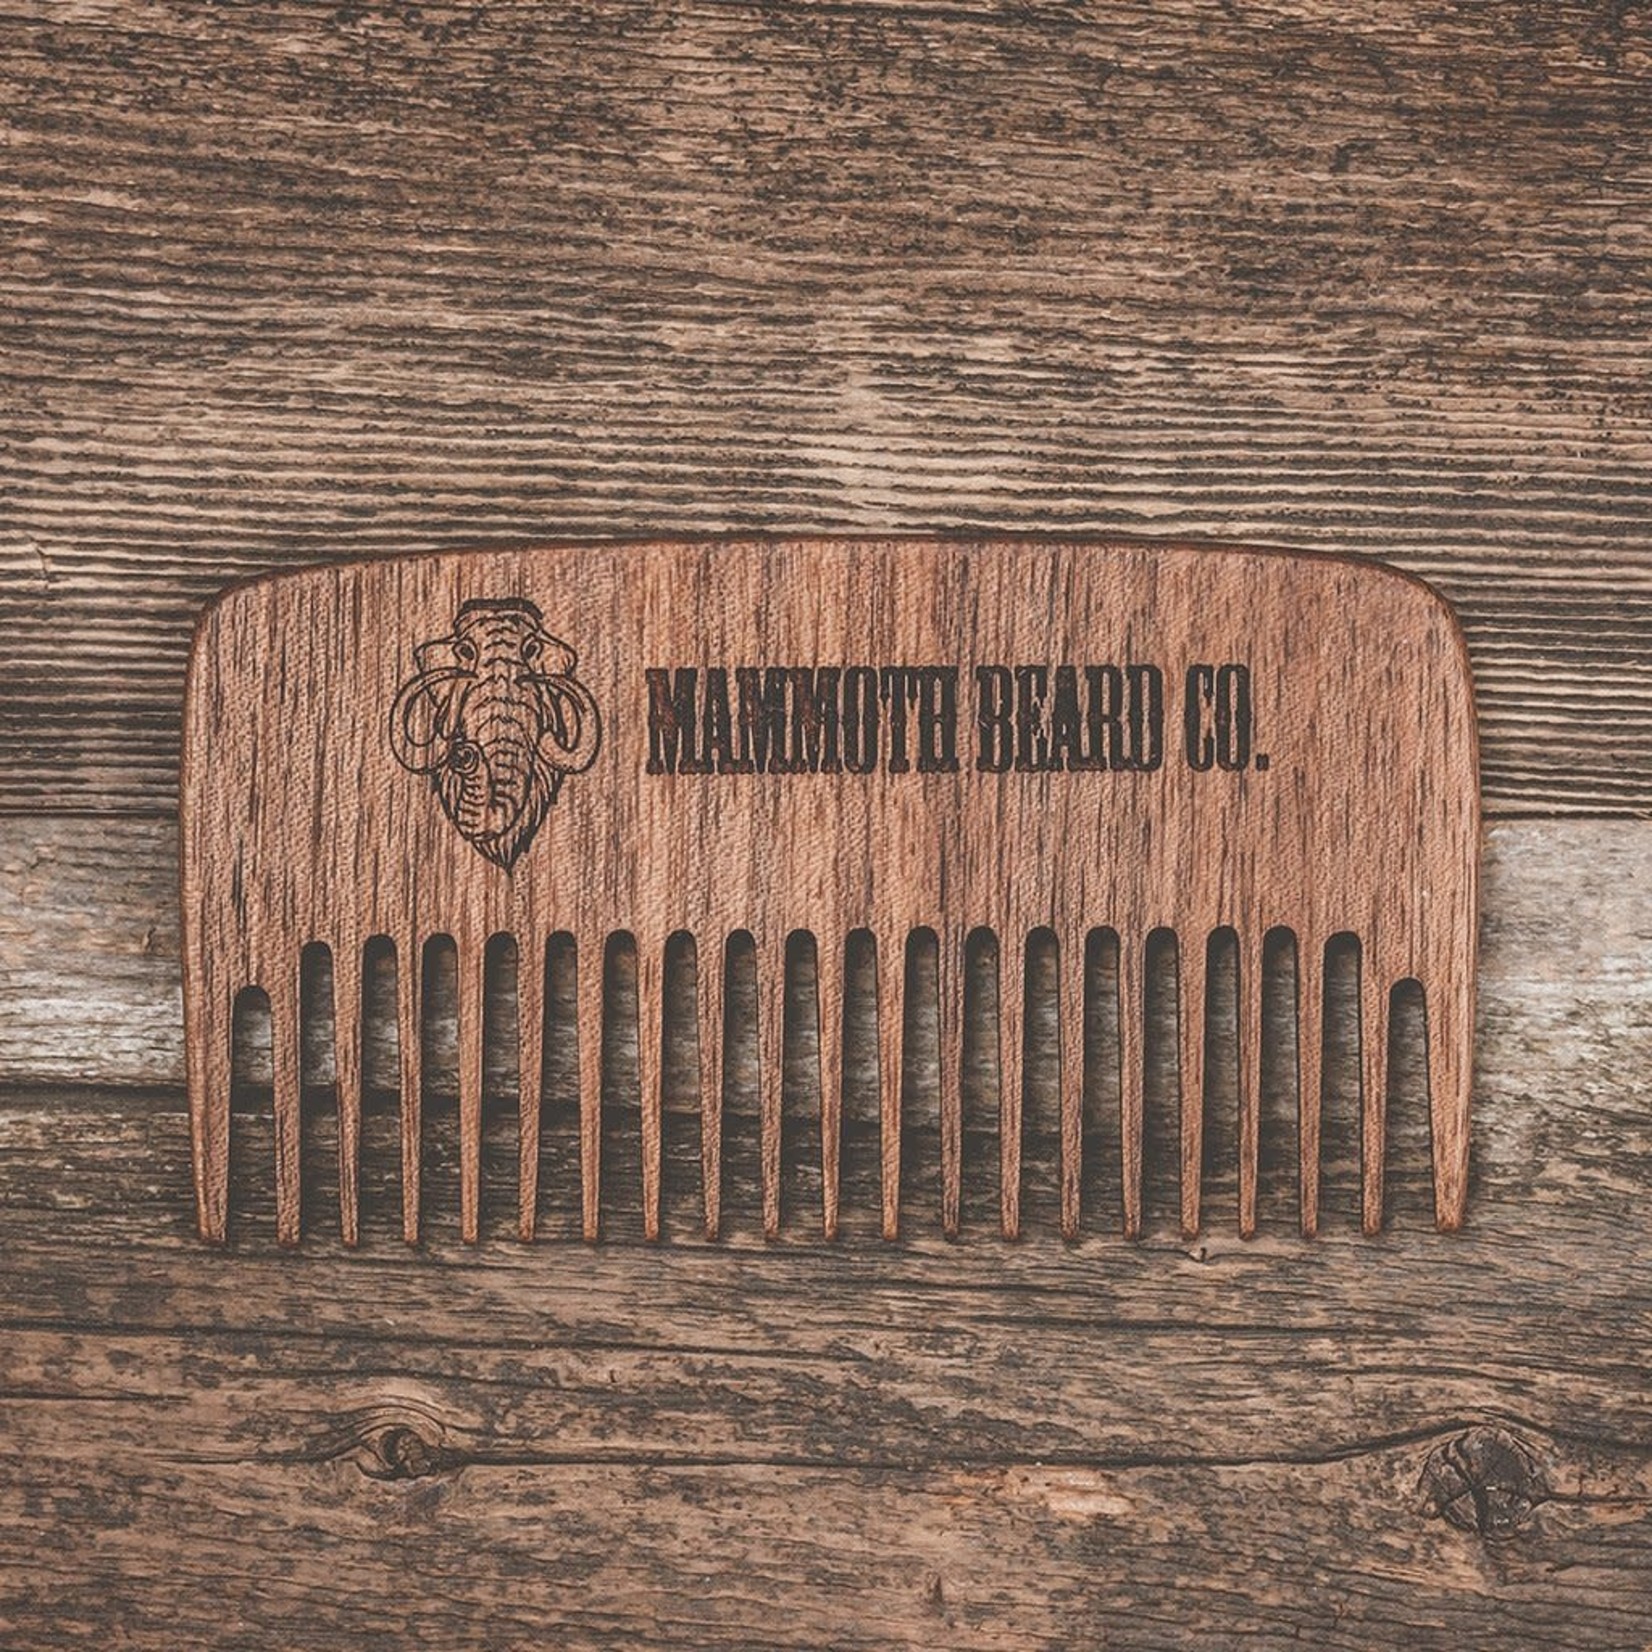 Mammoth Beard Co. The "Walnut Comb" by Mammoth Beard Co.